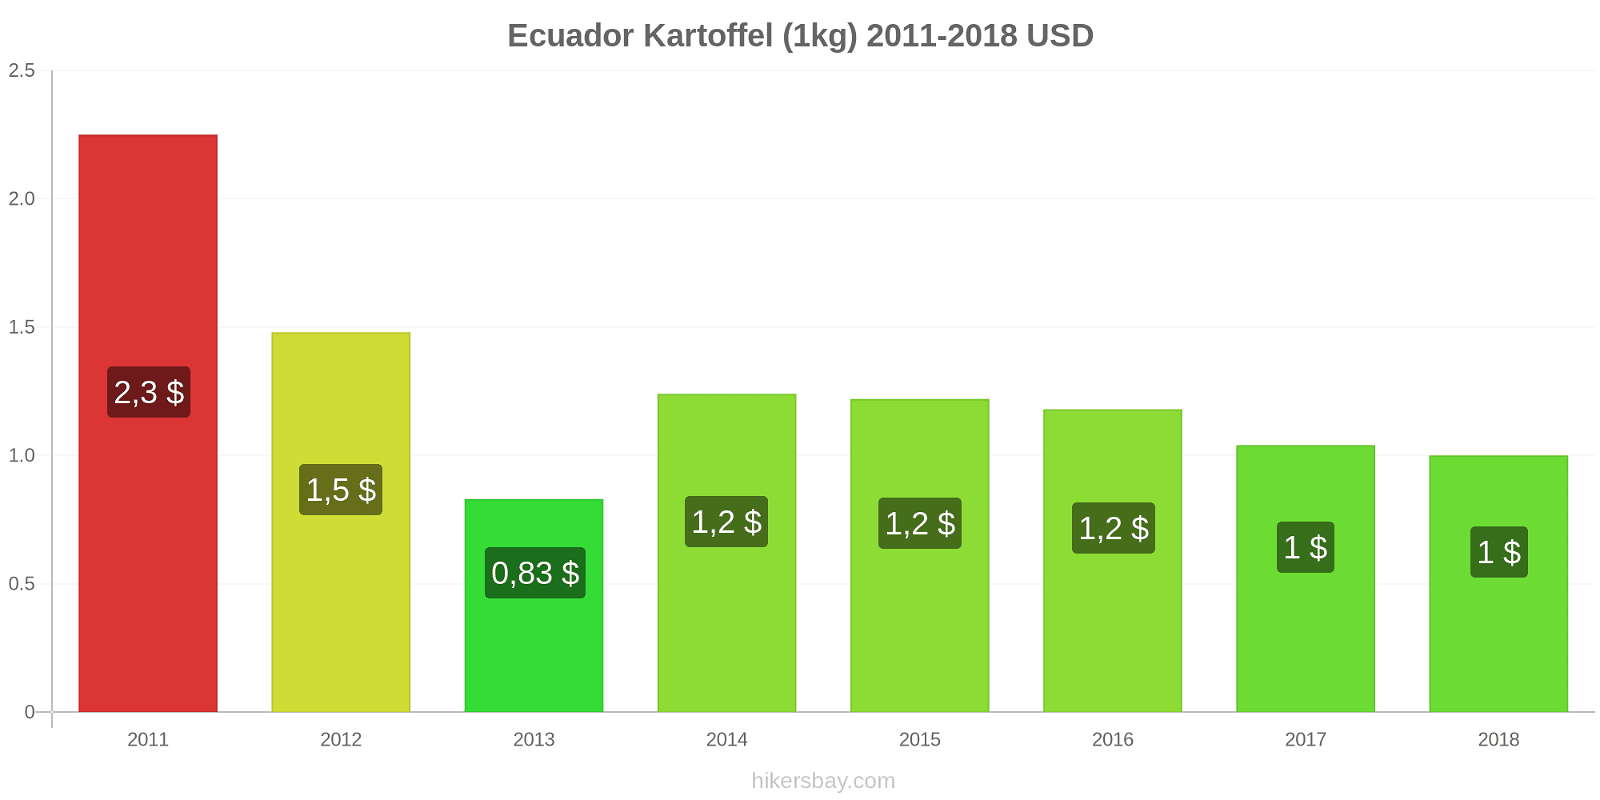 Ecuador Preisänderungen Kartoffeln (1kg) hikersbay.com